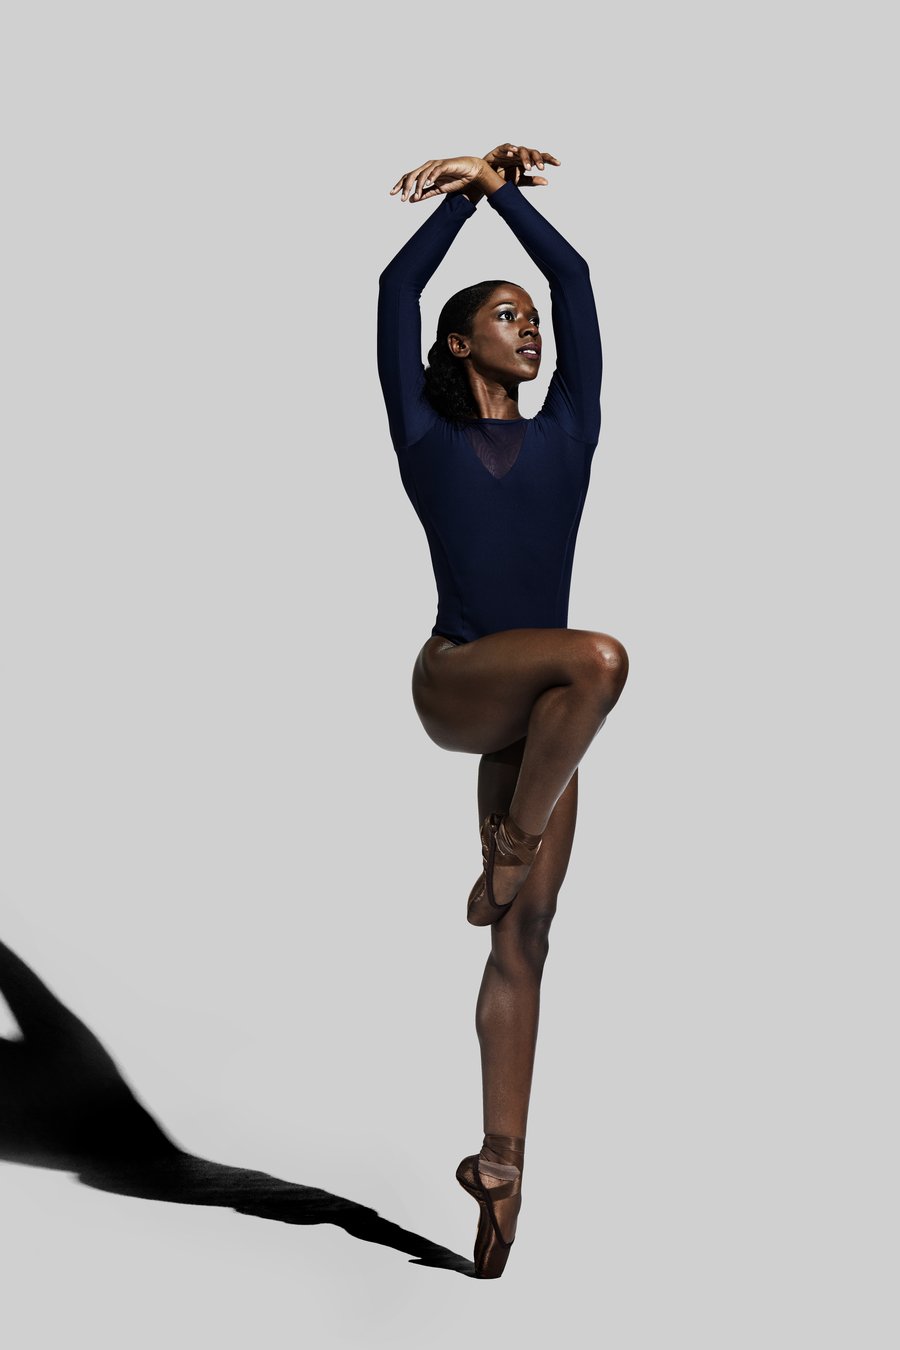 Image of Cira Robinson, former Senior Artist with Ballet Black.